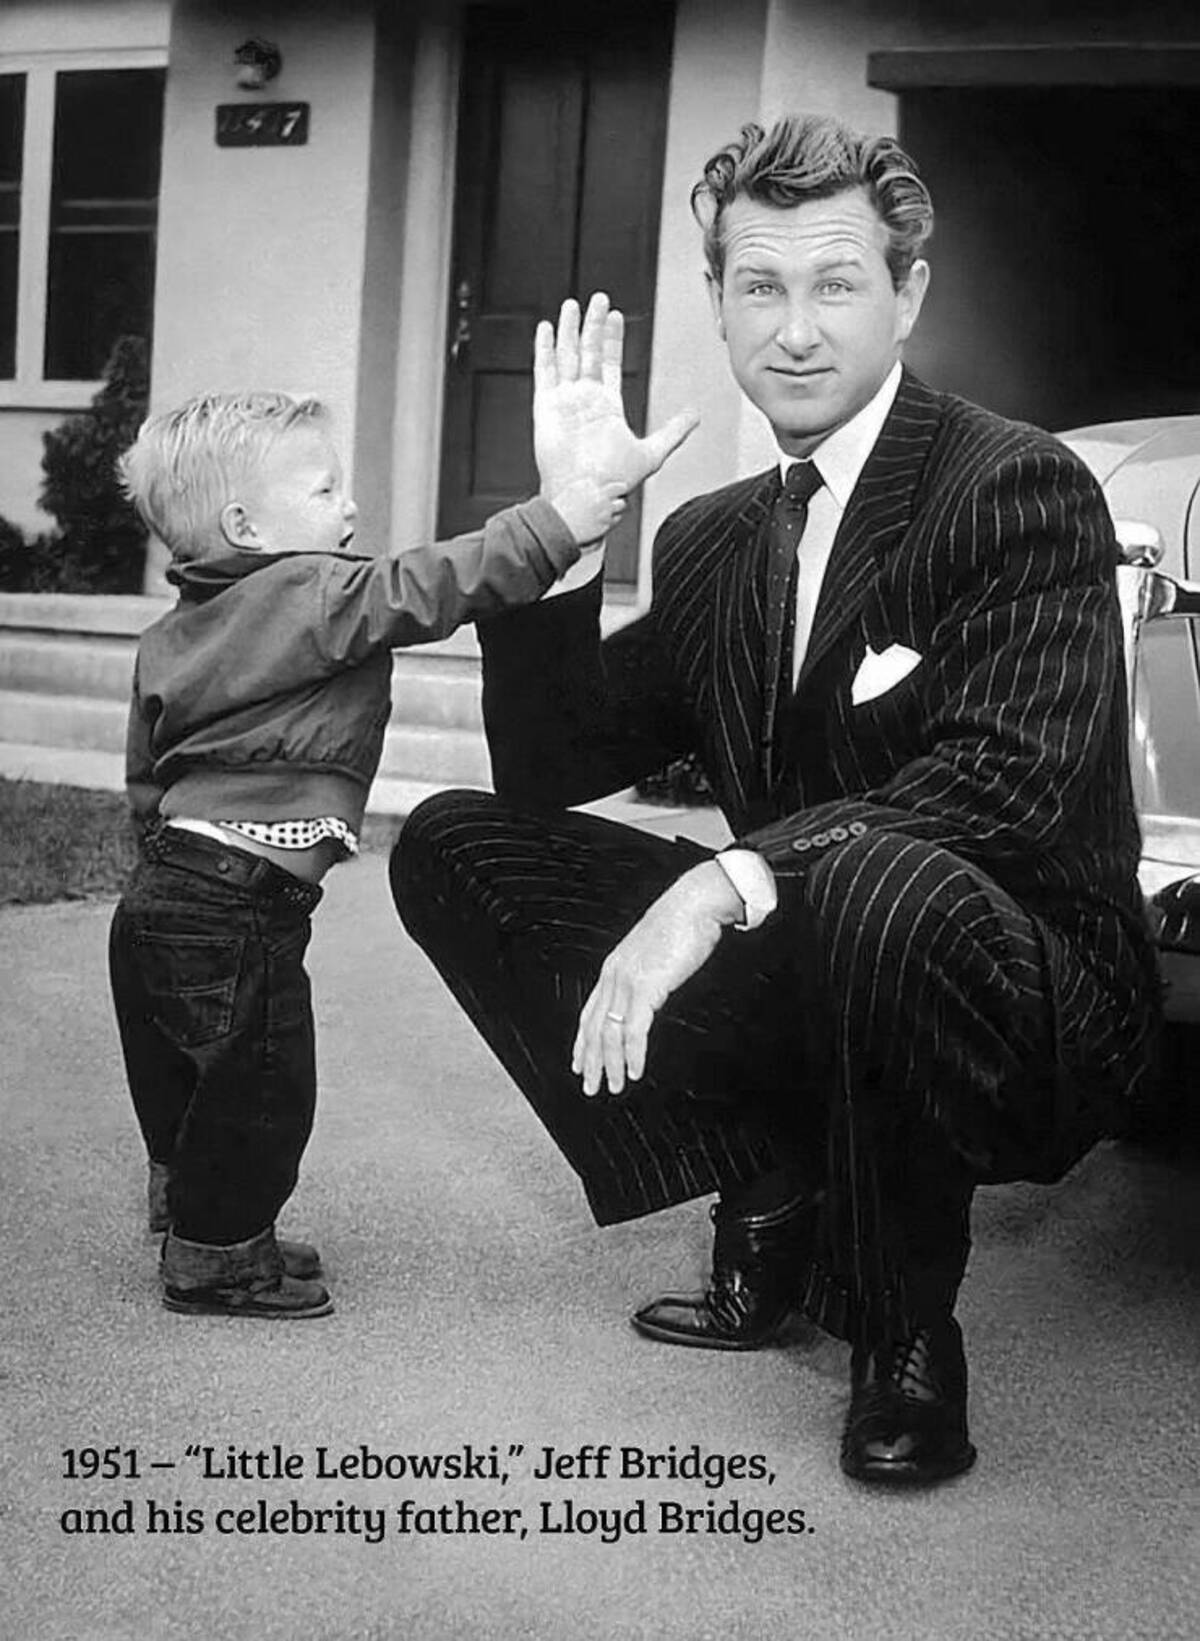 lloyd bridges young - 0000 1951 "Little Lebowski," Jeff Bridges, and his celebrity father, Lloyd Bridges.